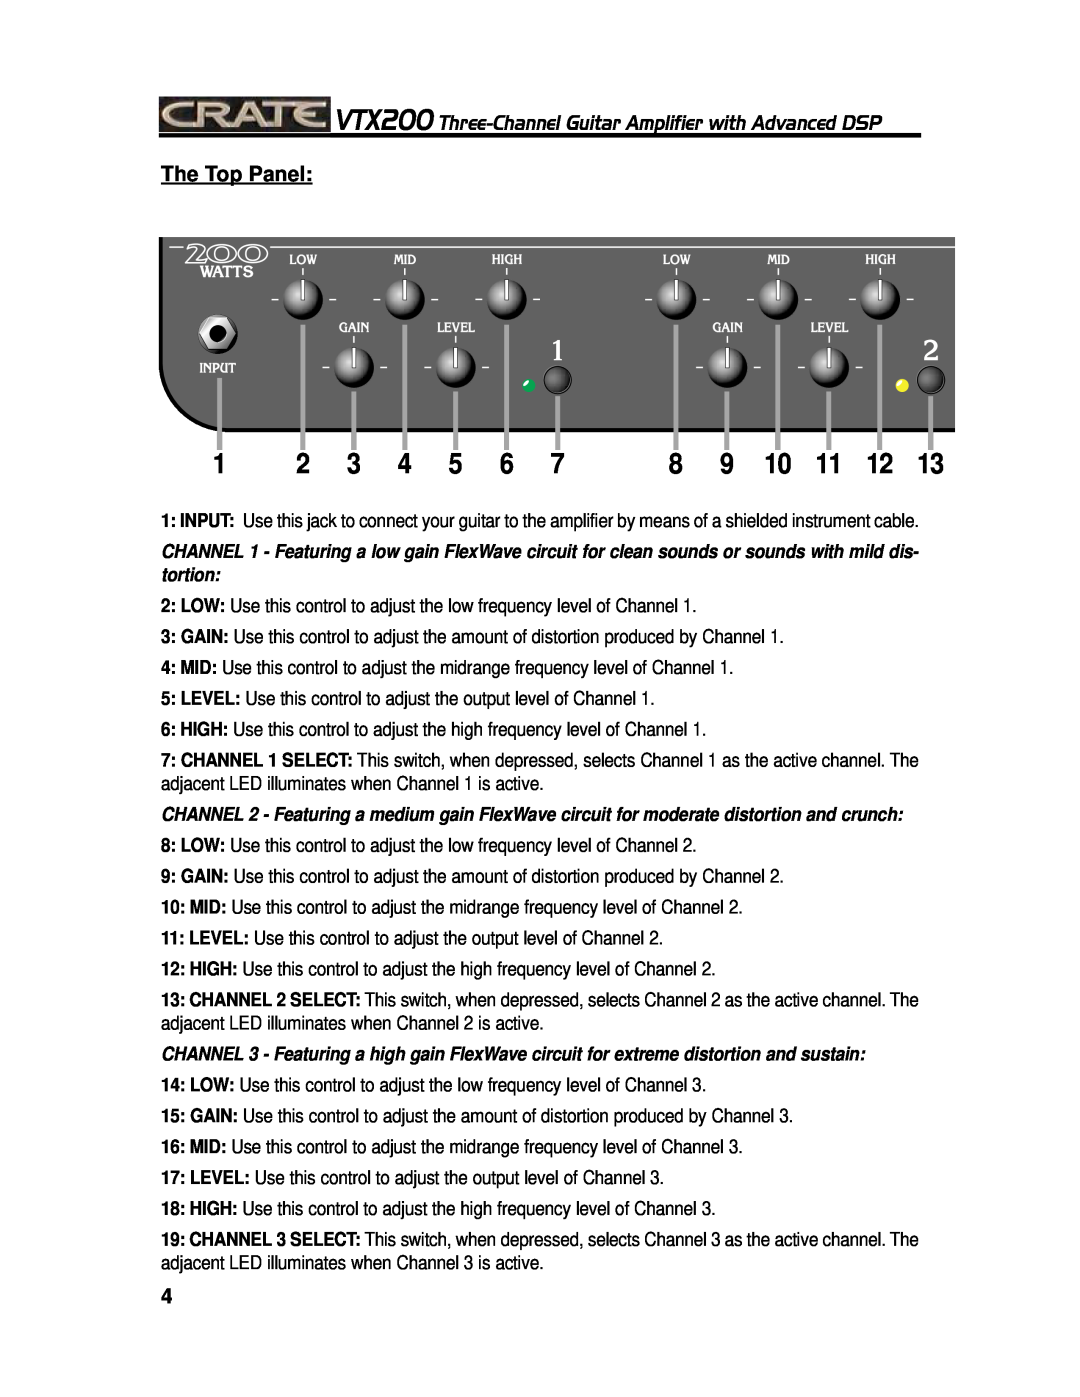 Crate Amplifiers VTX200 manual The Top Panel, High, Gain, Input 